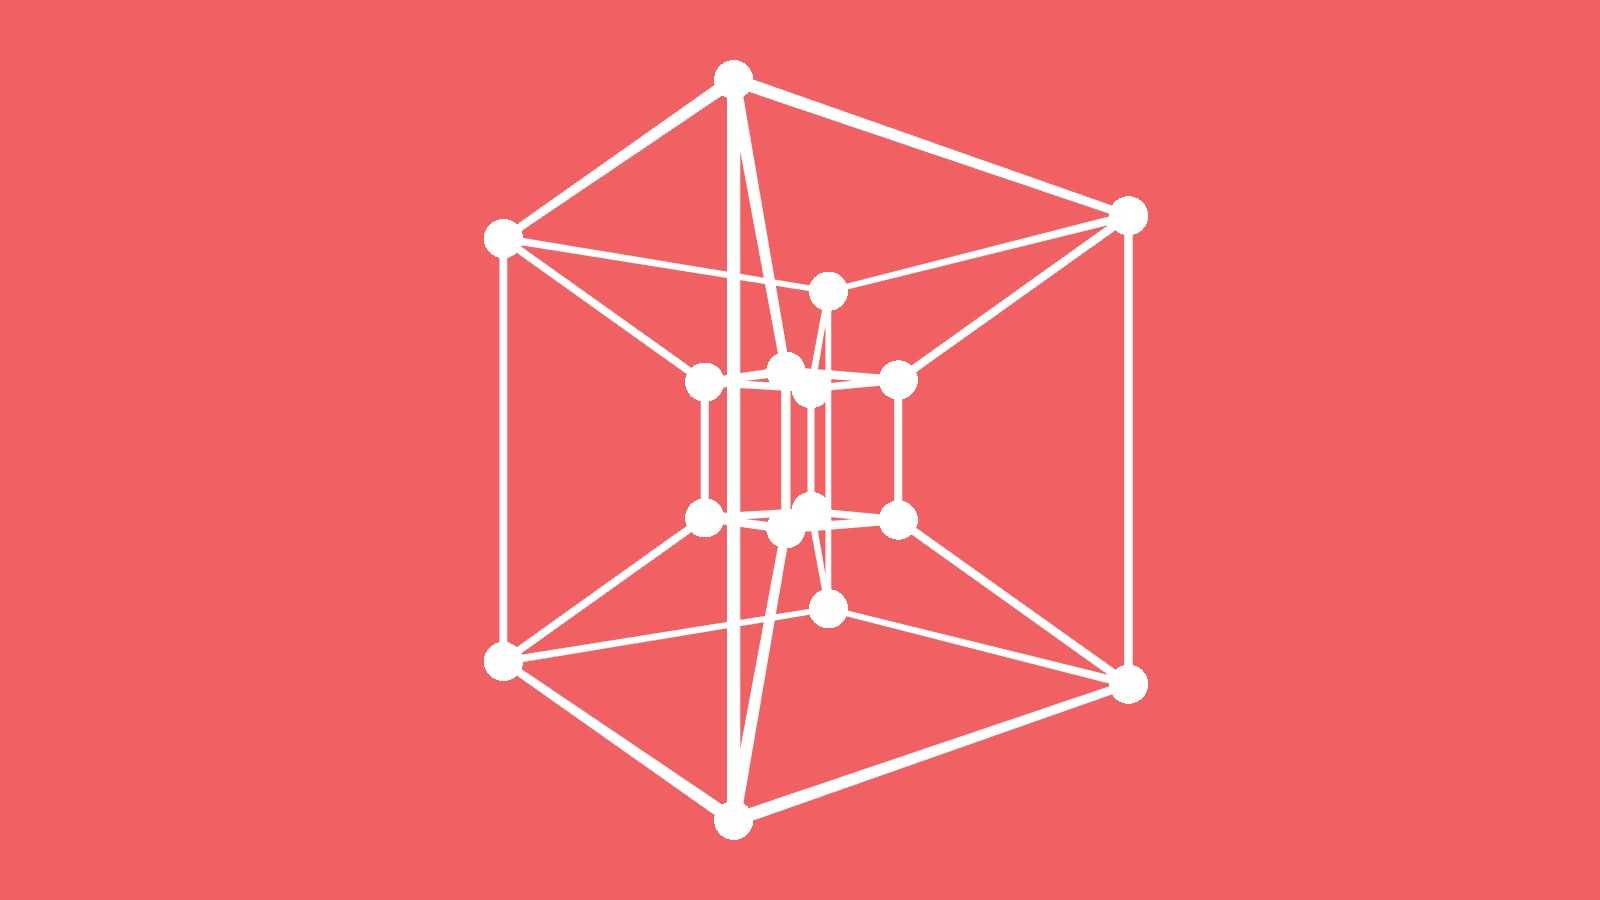 4D Hypercube (aka 'Tesseract')